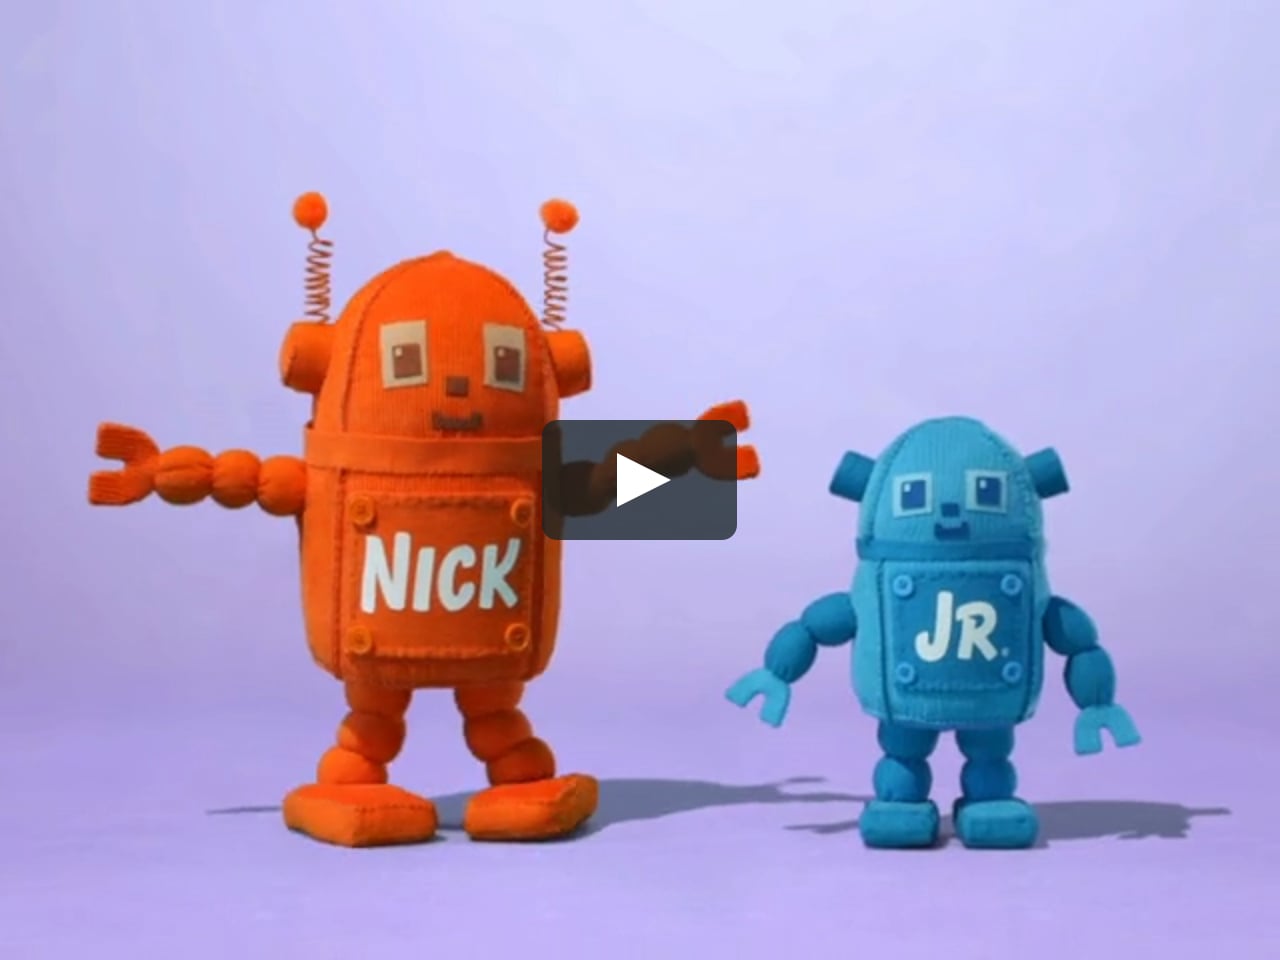 nick-jr-huggables-dancing-plush-channel-ids-on-vimeo